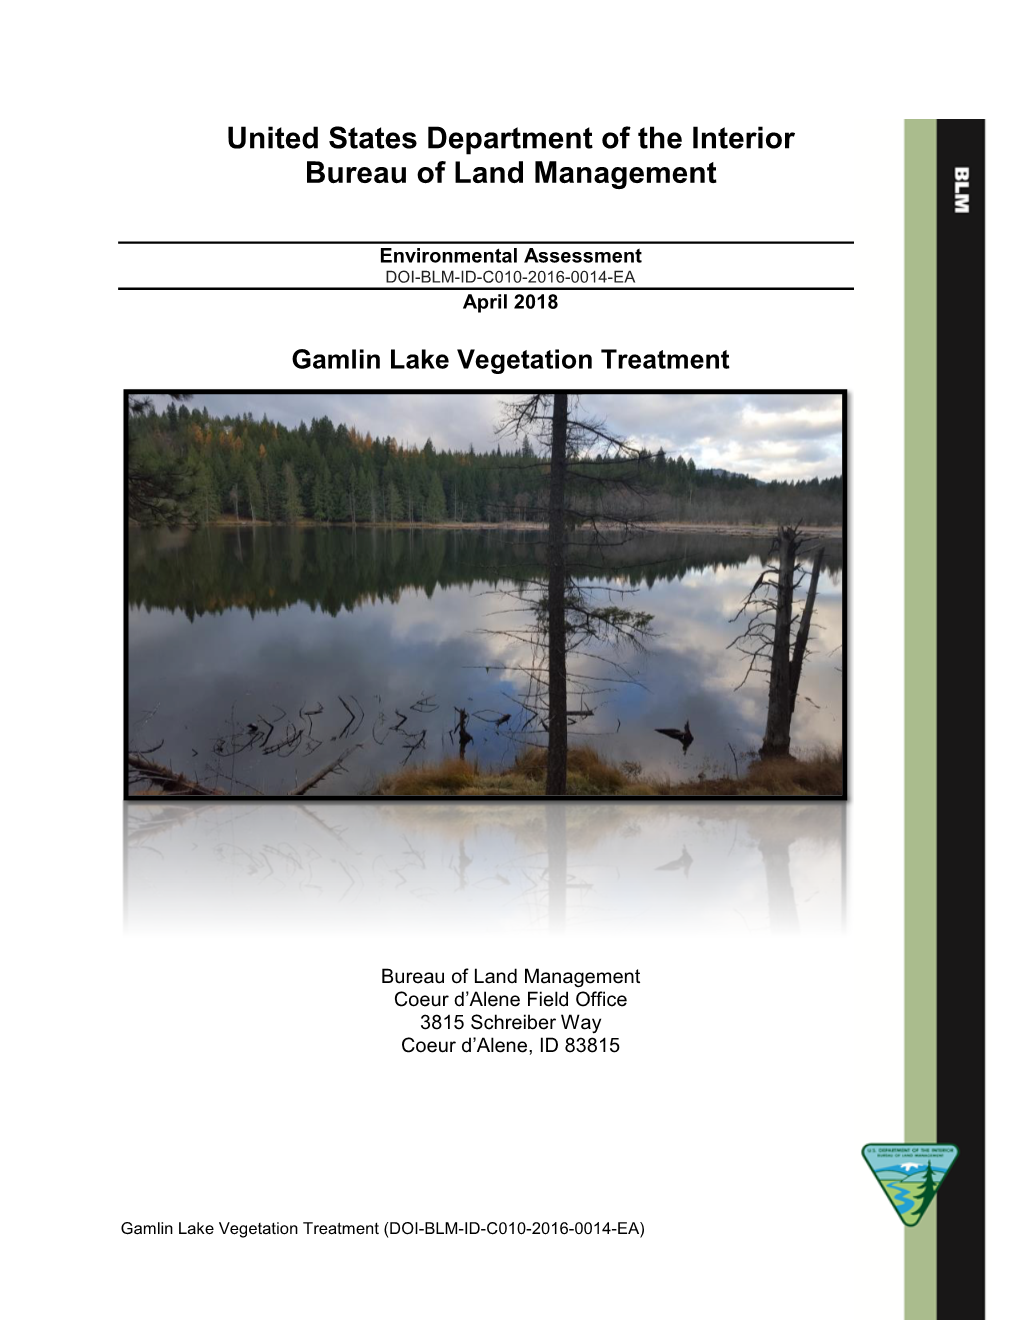 BLM Gamlin Lake Environmental Assessment 2018